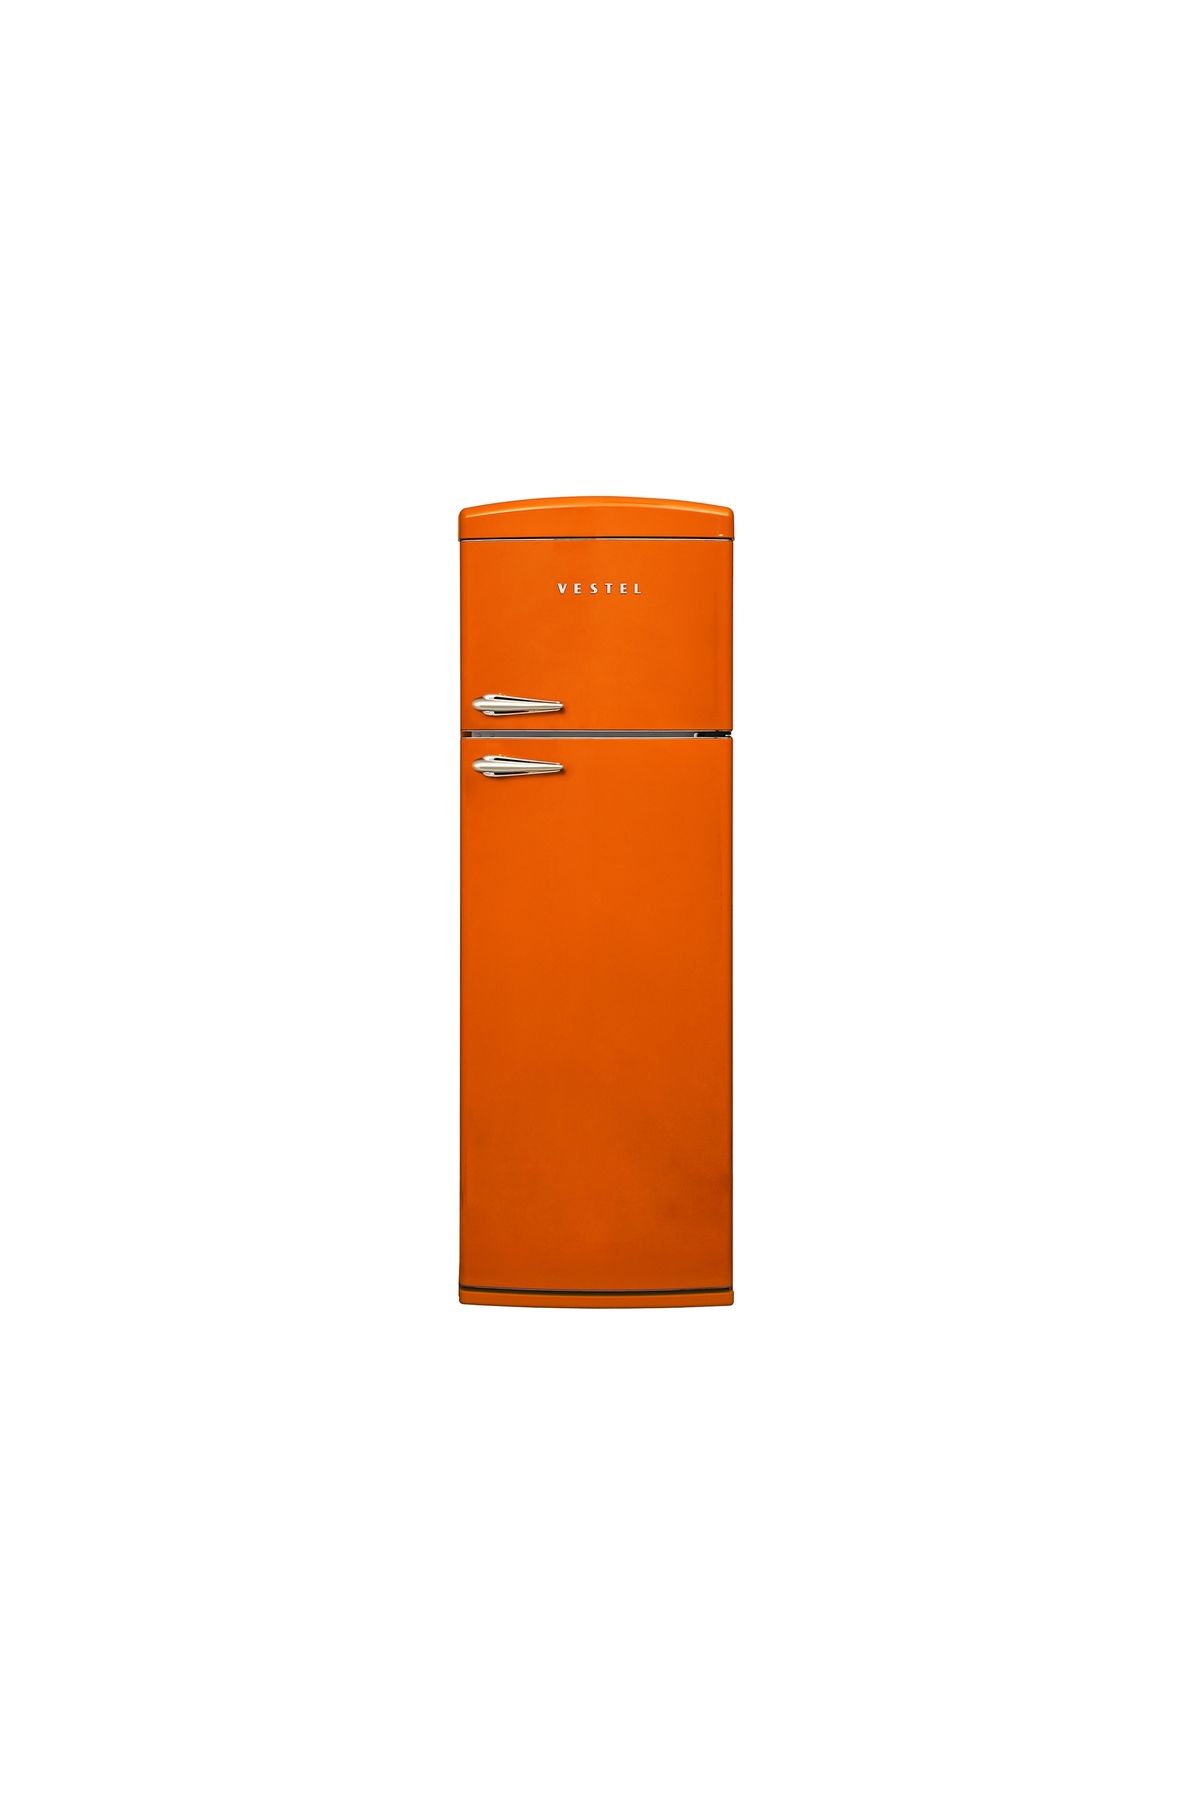 VESTEL RETRO SC32001 Turuncu Statik Buzdolabı